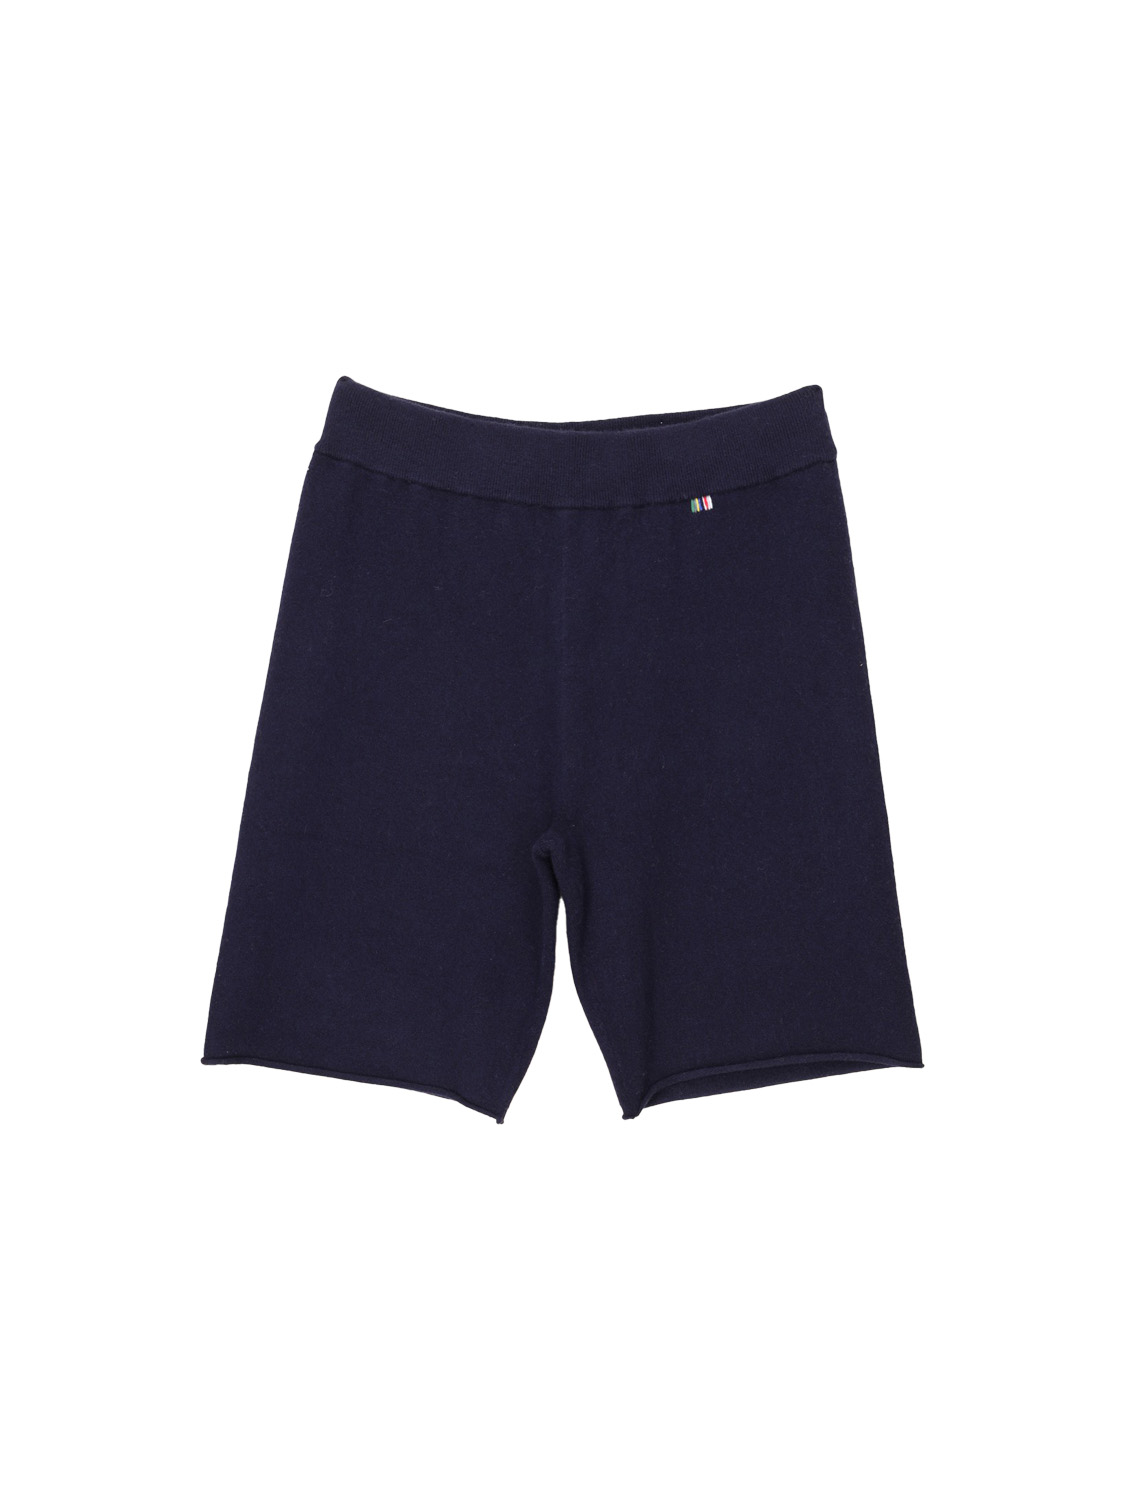 Extreme Cashmere N° 240 Running - Pantalones cortos de cachemira   marina Talla única